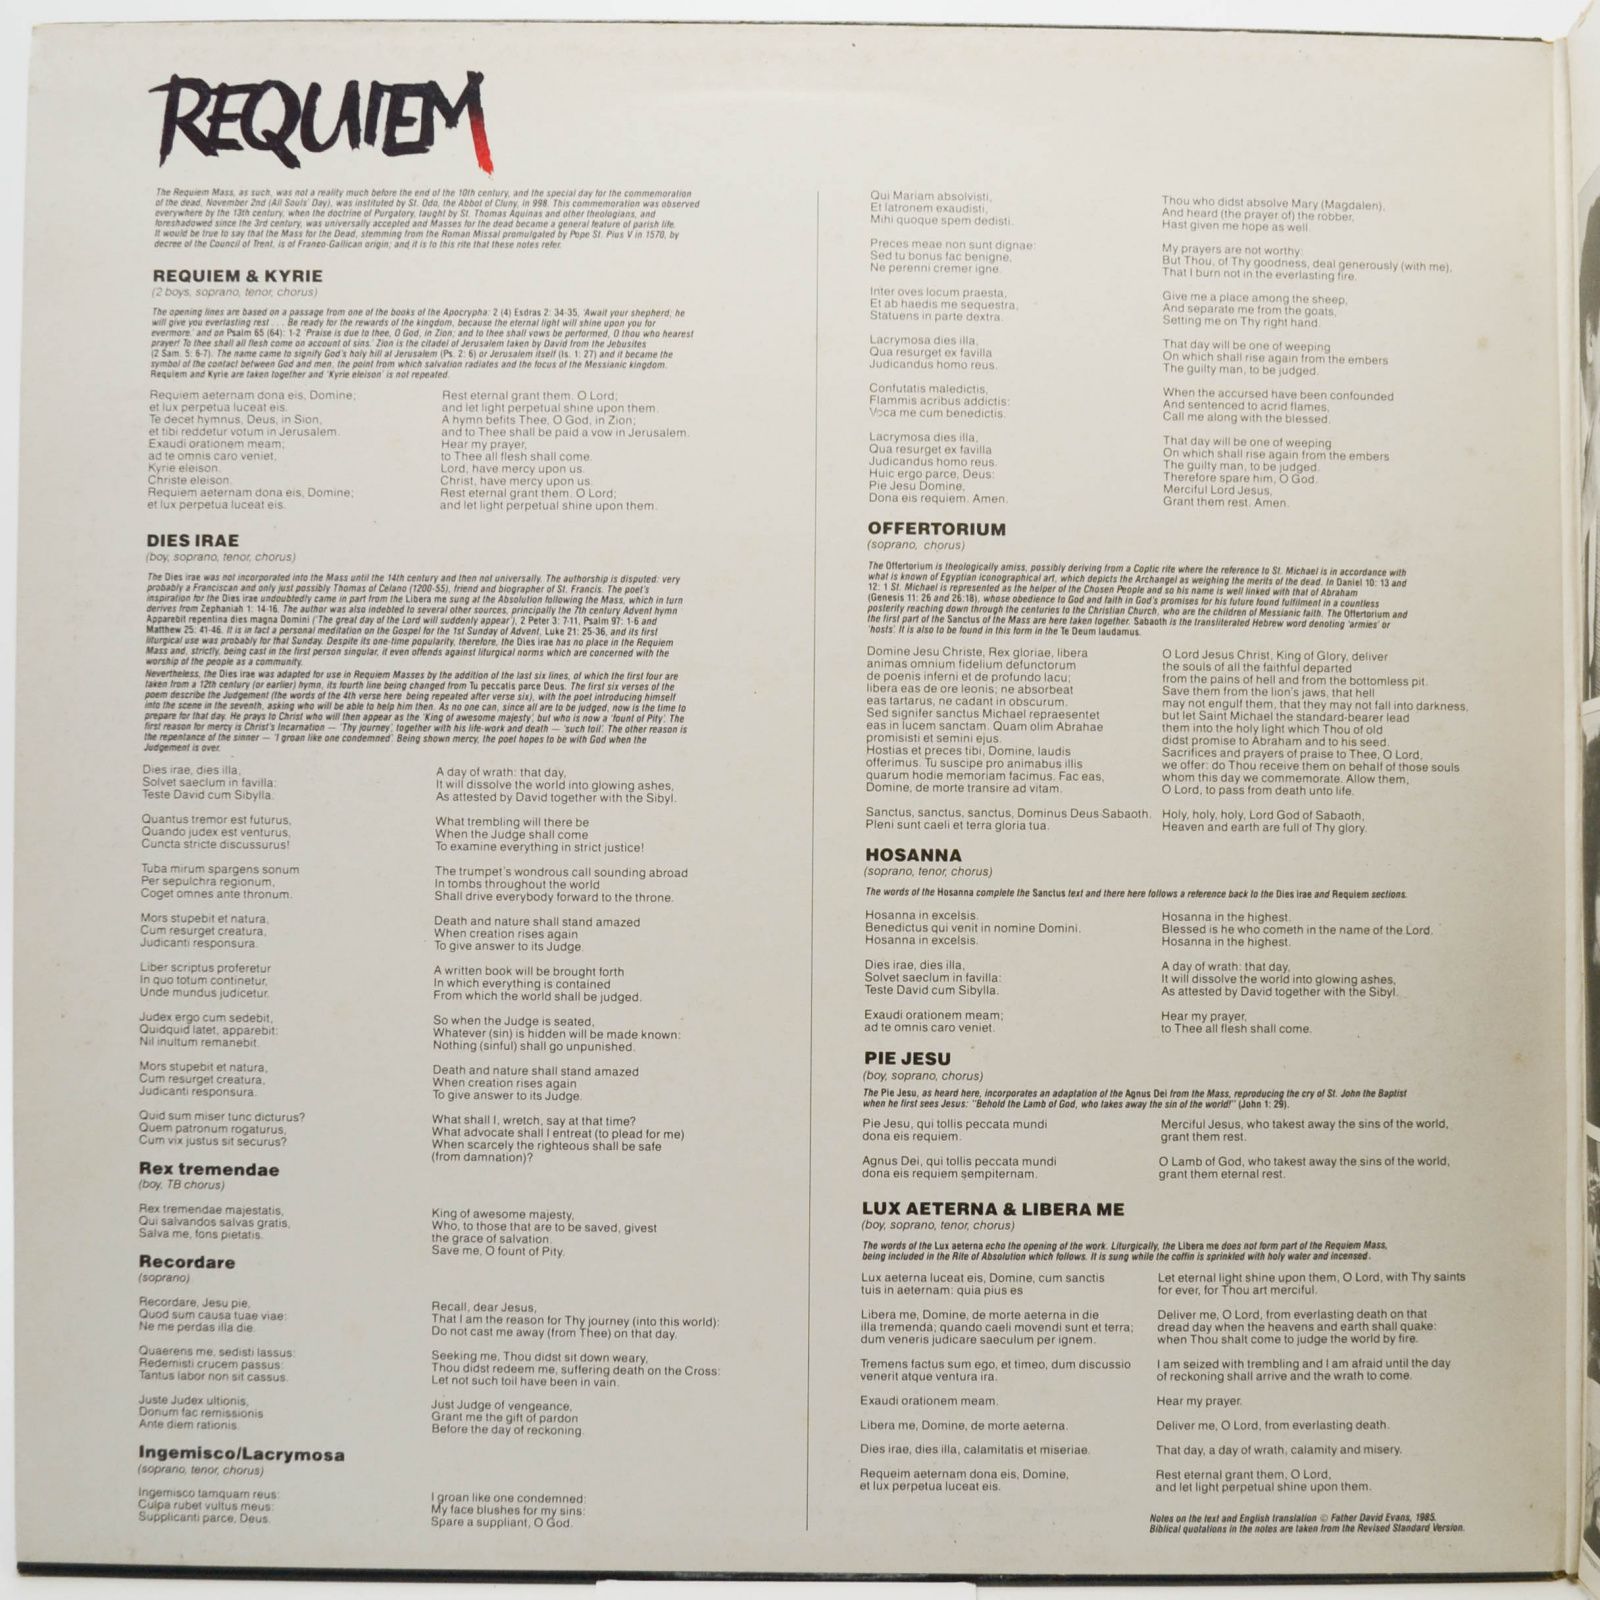 Andrew Lloyd Webber — Requiem, 1985